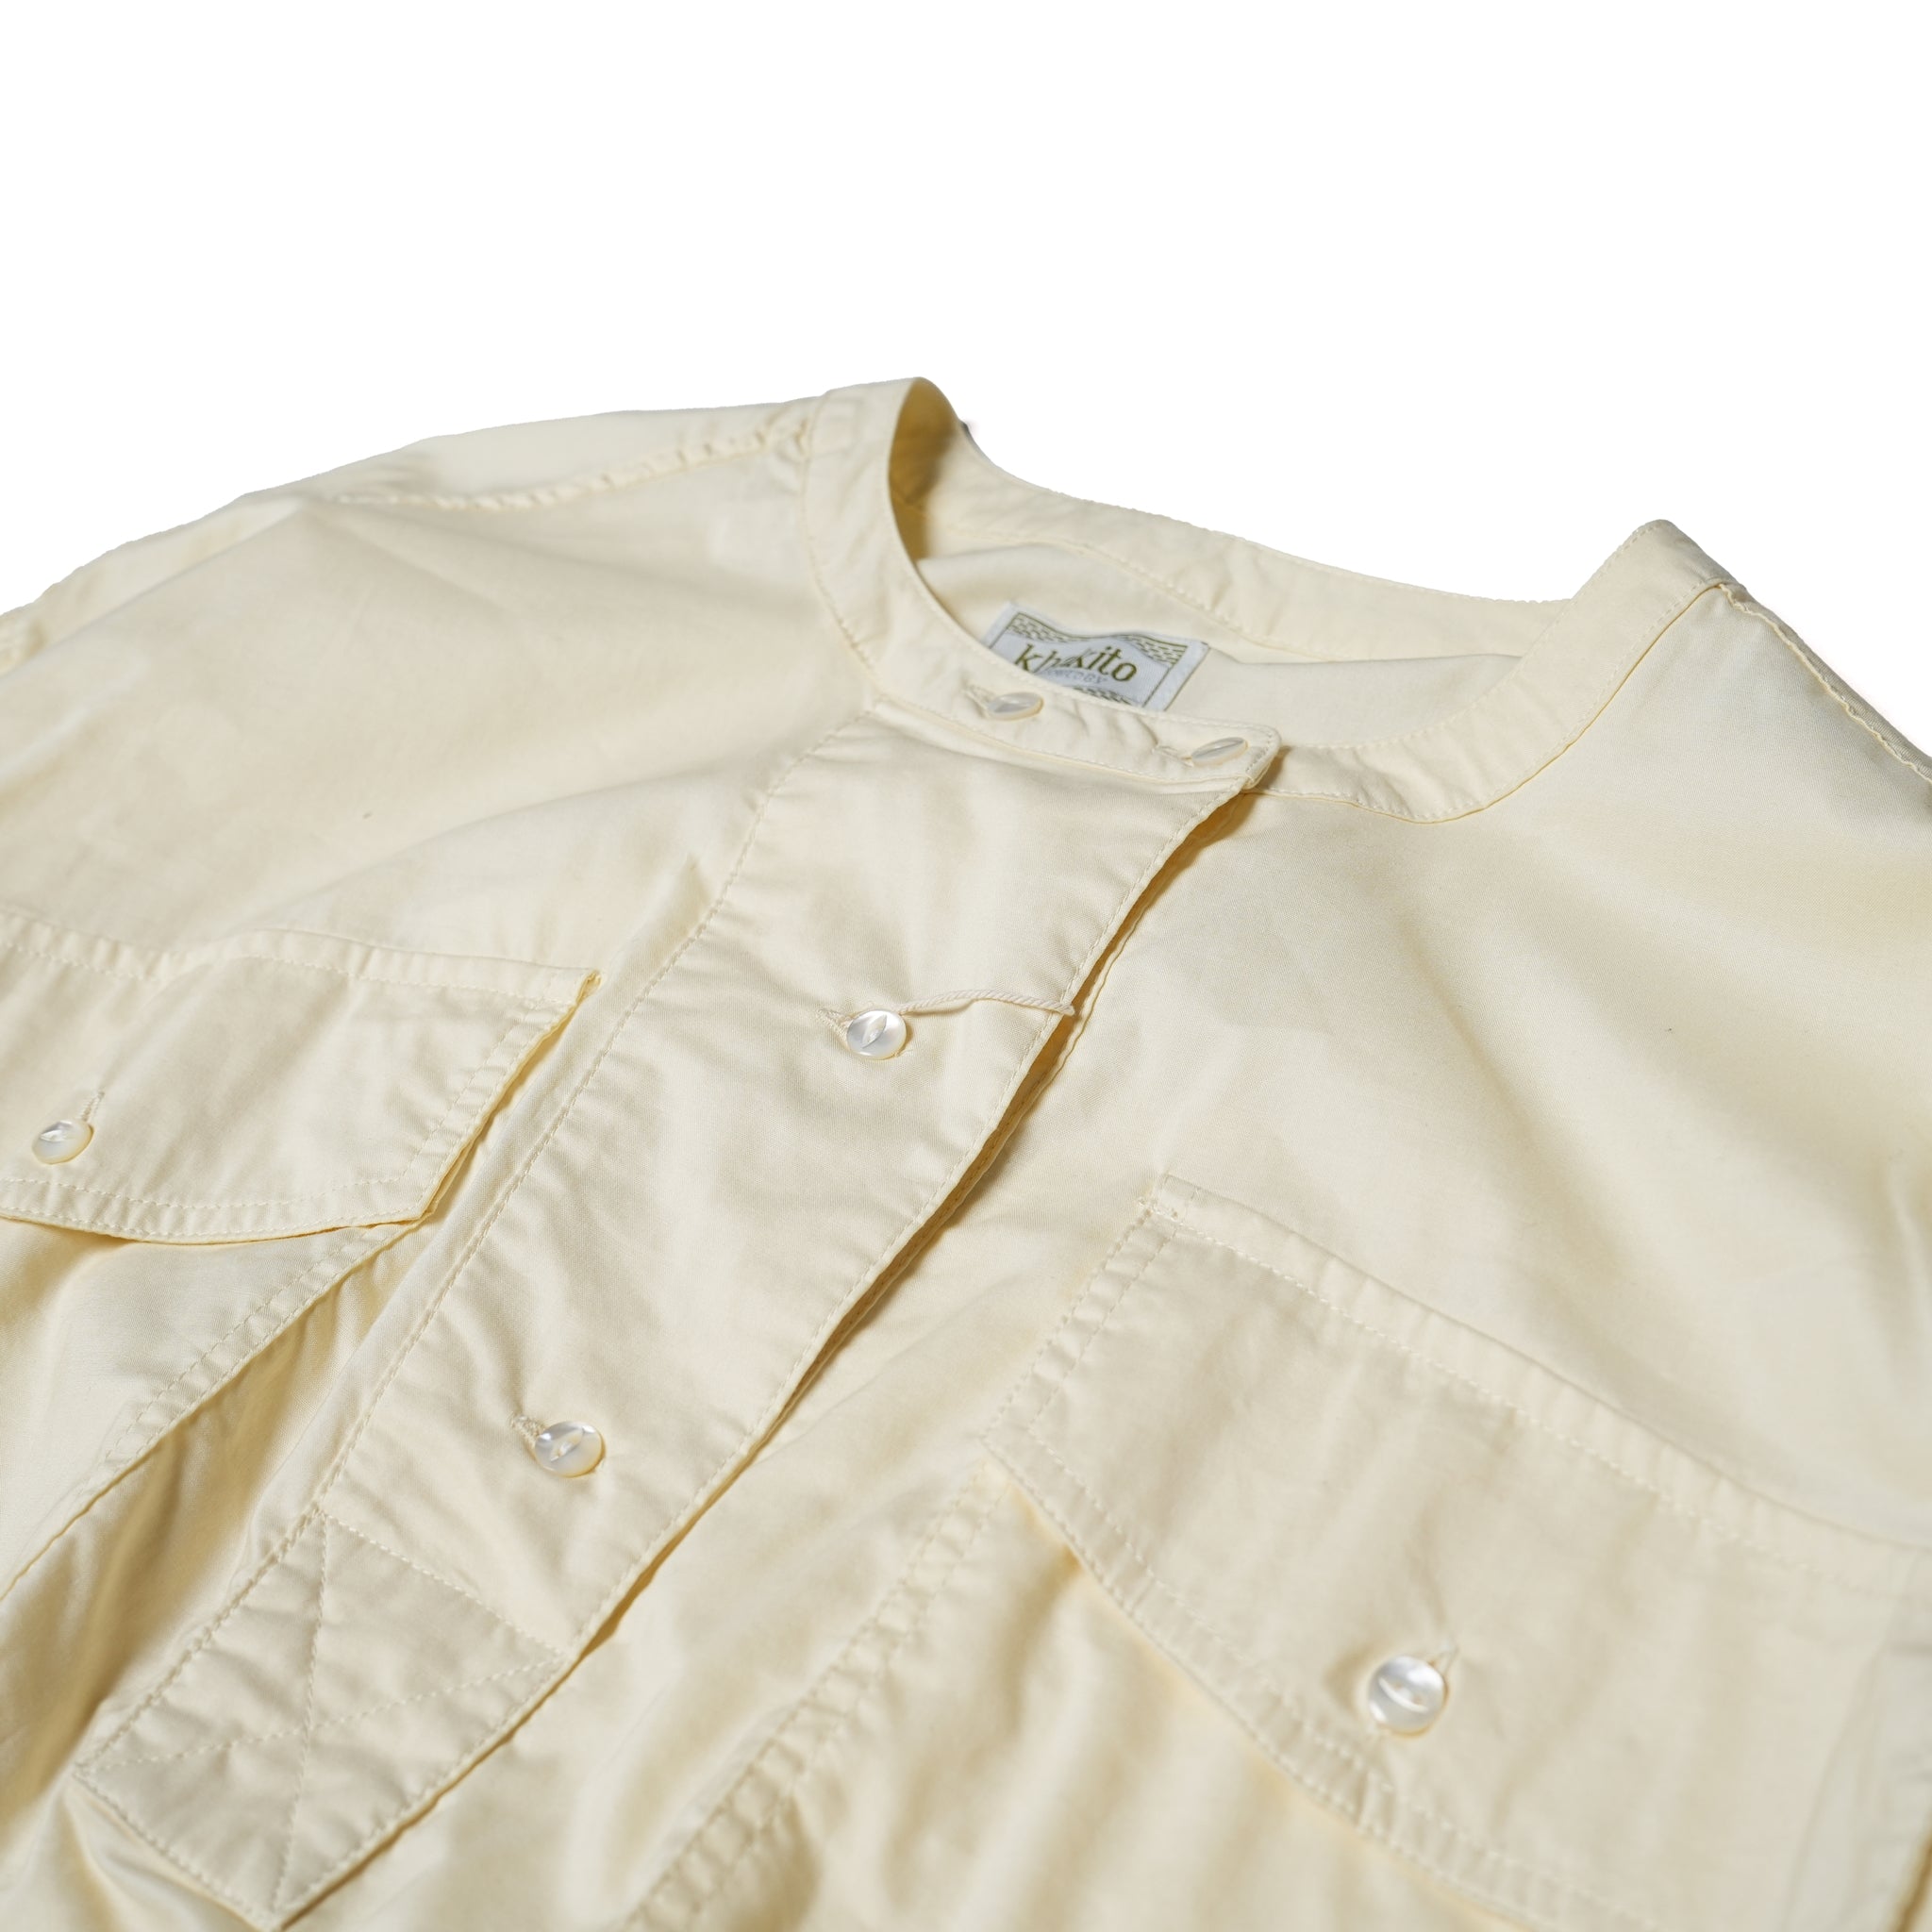 No:WTR4575 | Name:M55ポケット付きアレンジシャツ | Color:Ivory/Black | Size:Free【KHAKITO_ カキート】